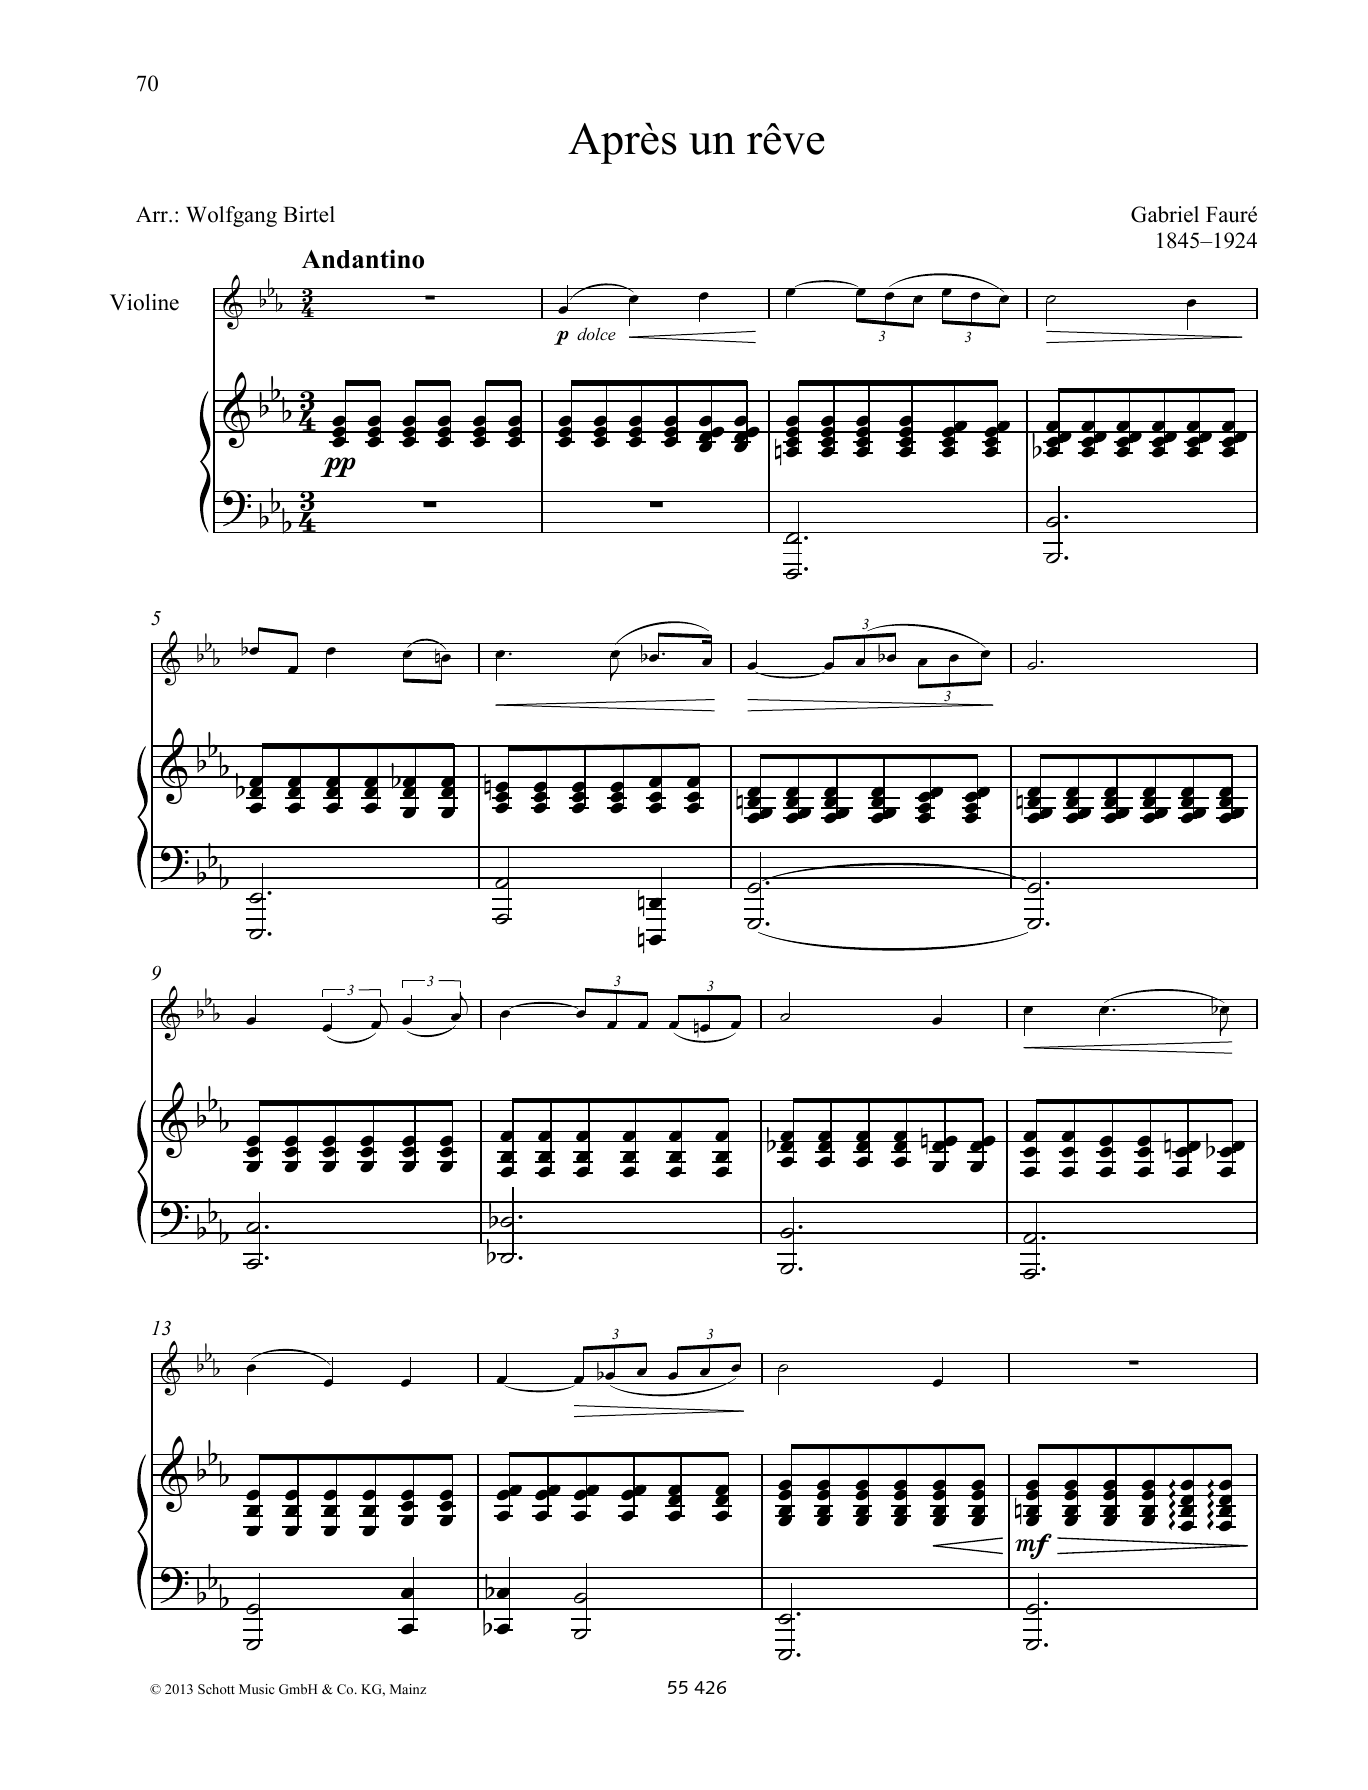 Gabriel Fauré Apres un reve sheet music notes and chords arranged for String Solo